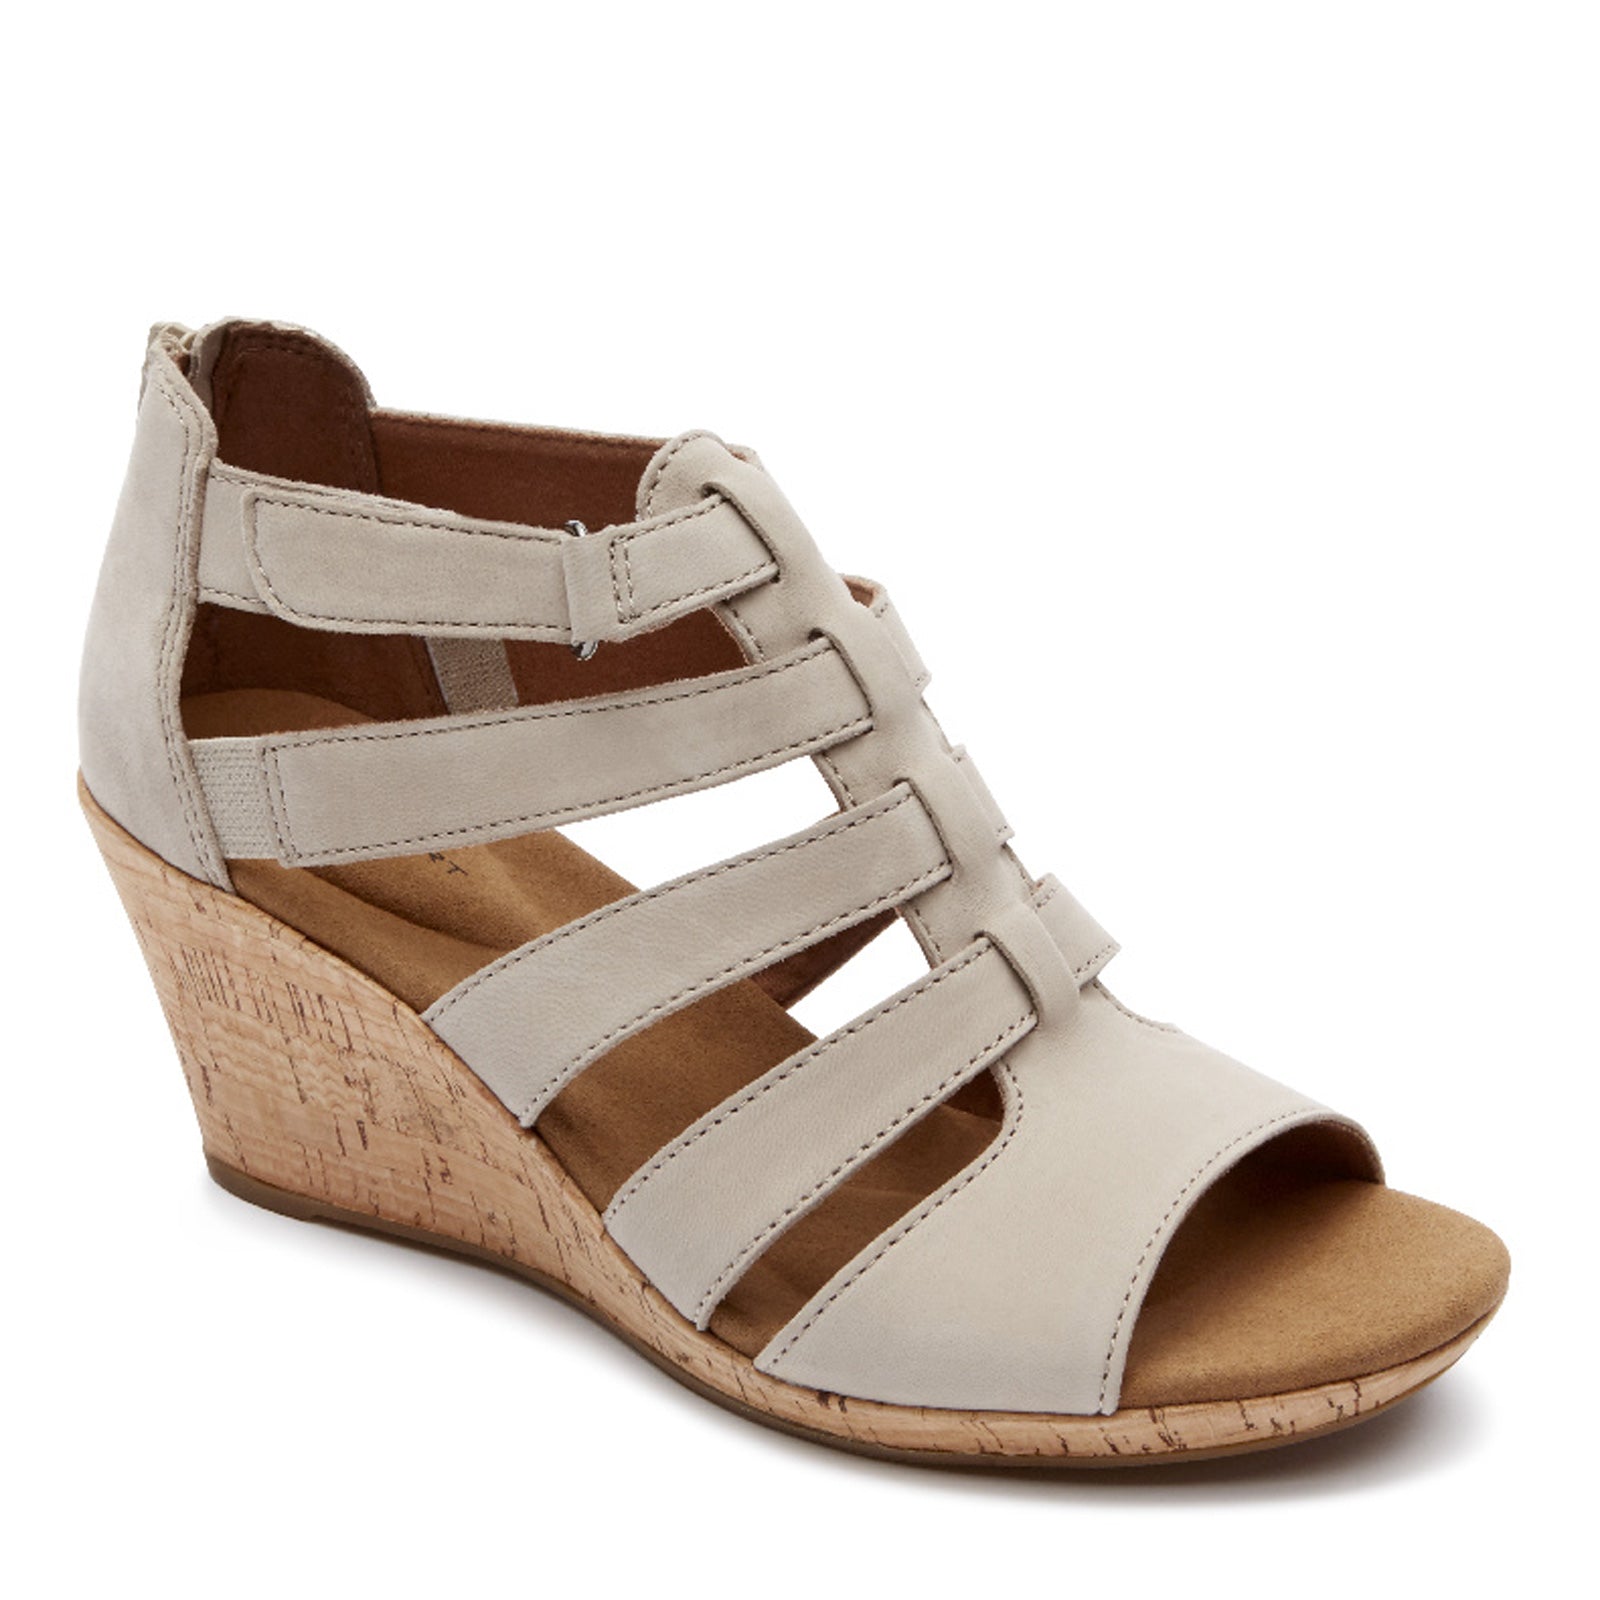 Seychelles | Shoes | Seychelles Girls White Gladiator Sandals Size 7 Euc |  Poshmark